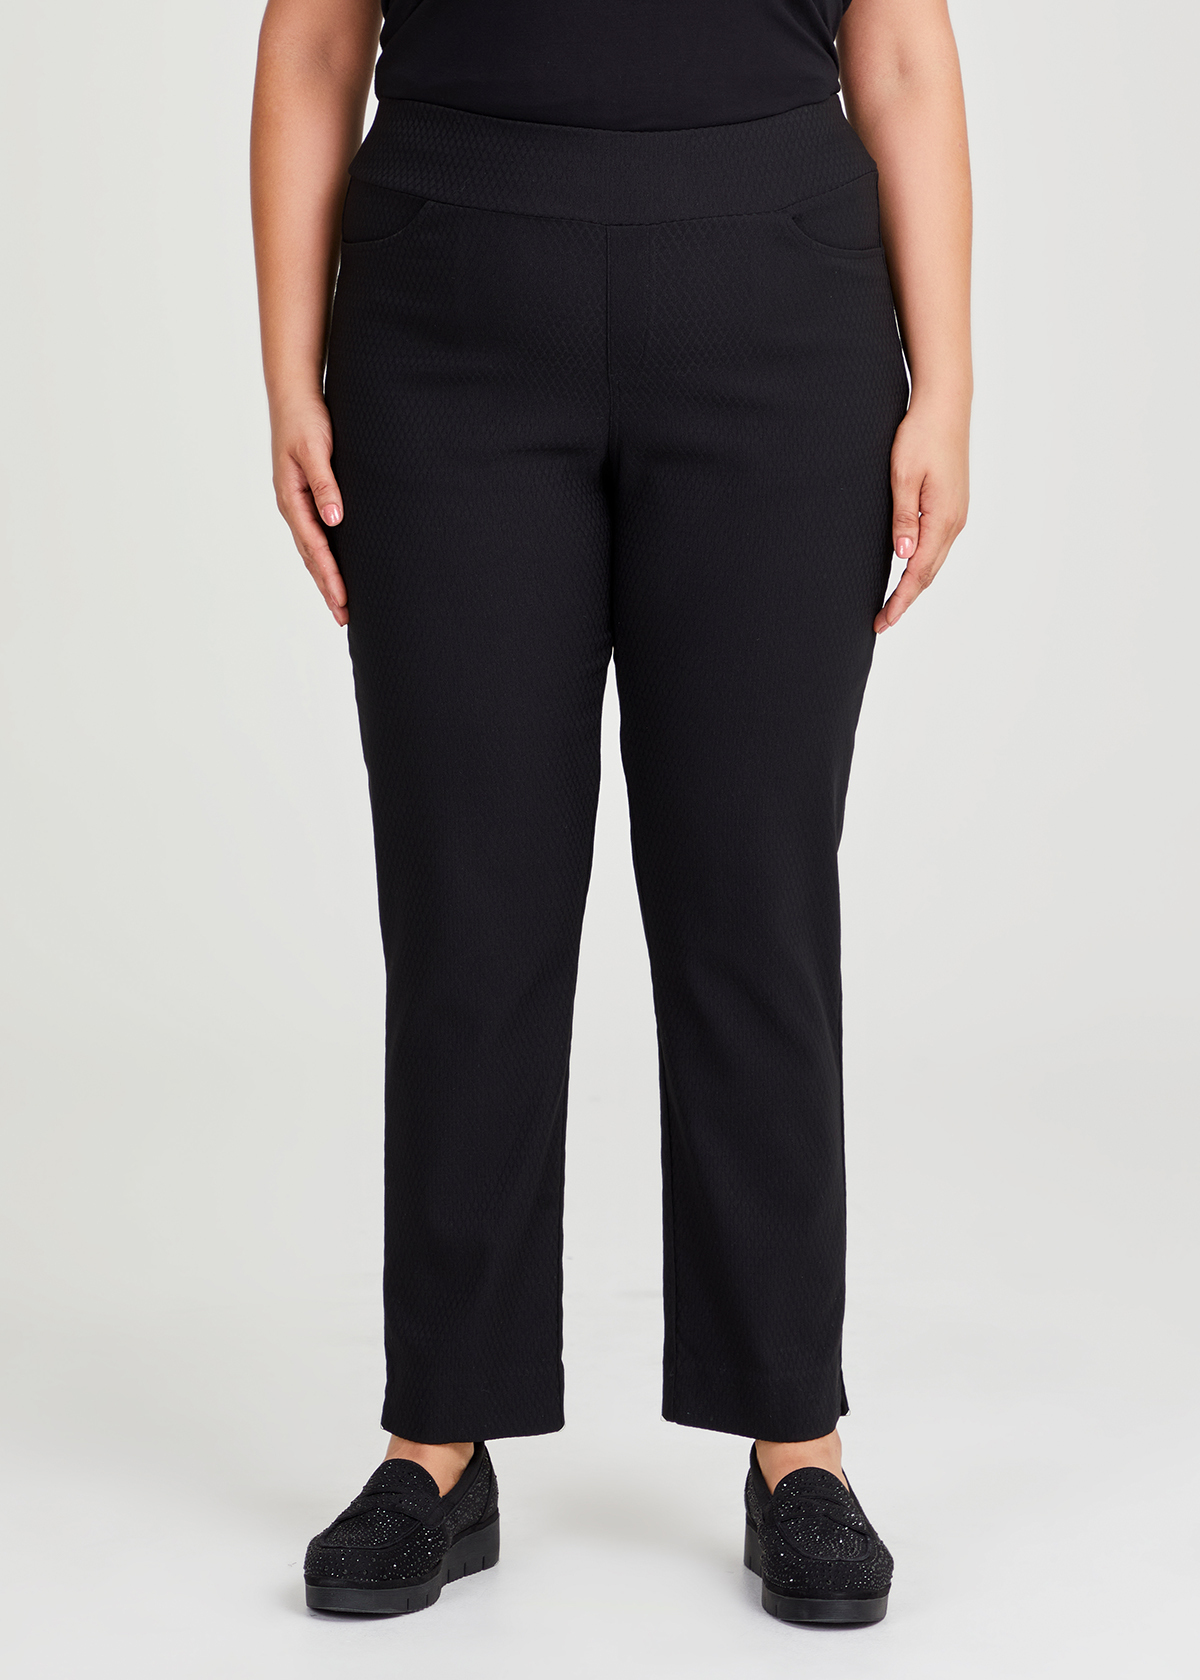 Shop Plus Size Stretch Lucille Pant in Black | Taking Shape AU